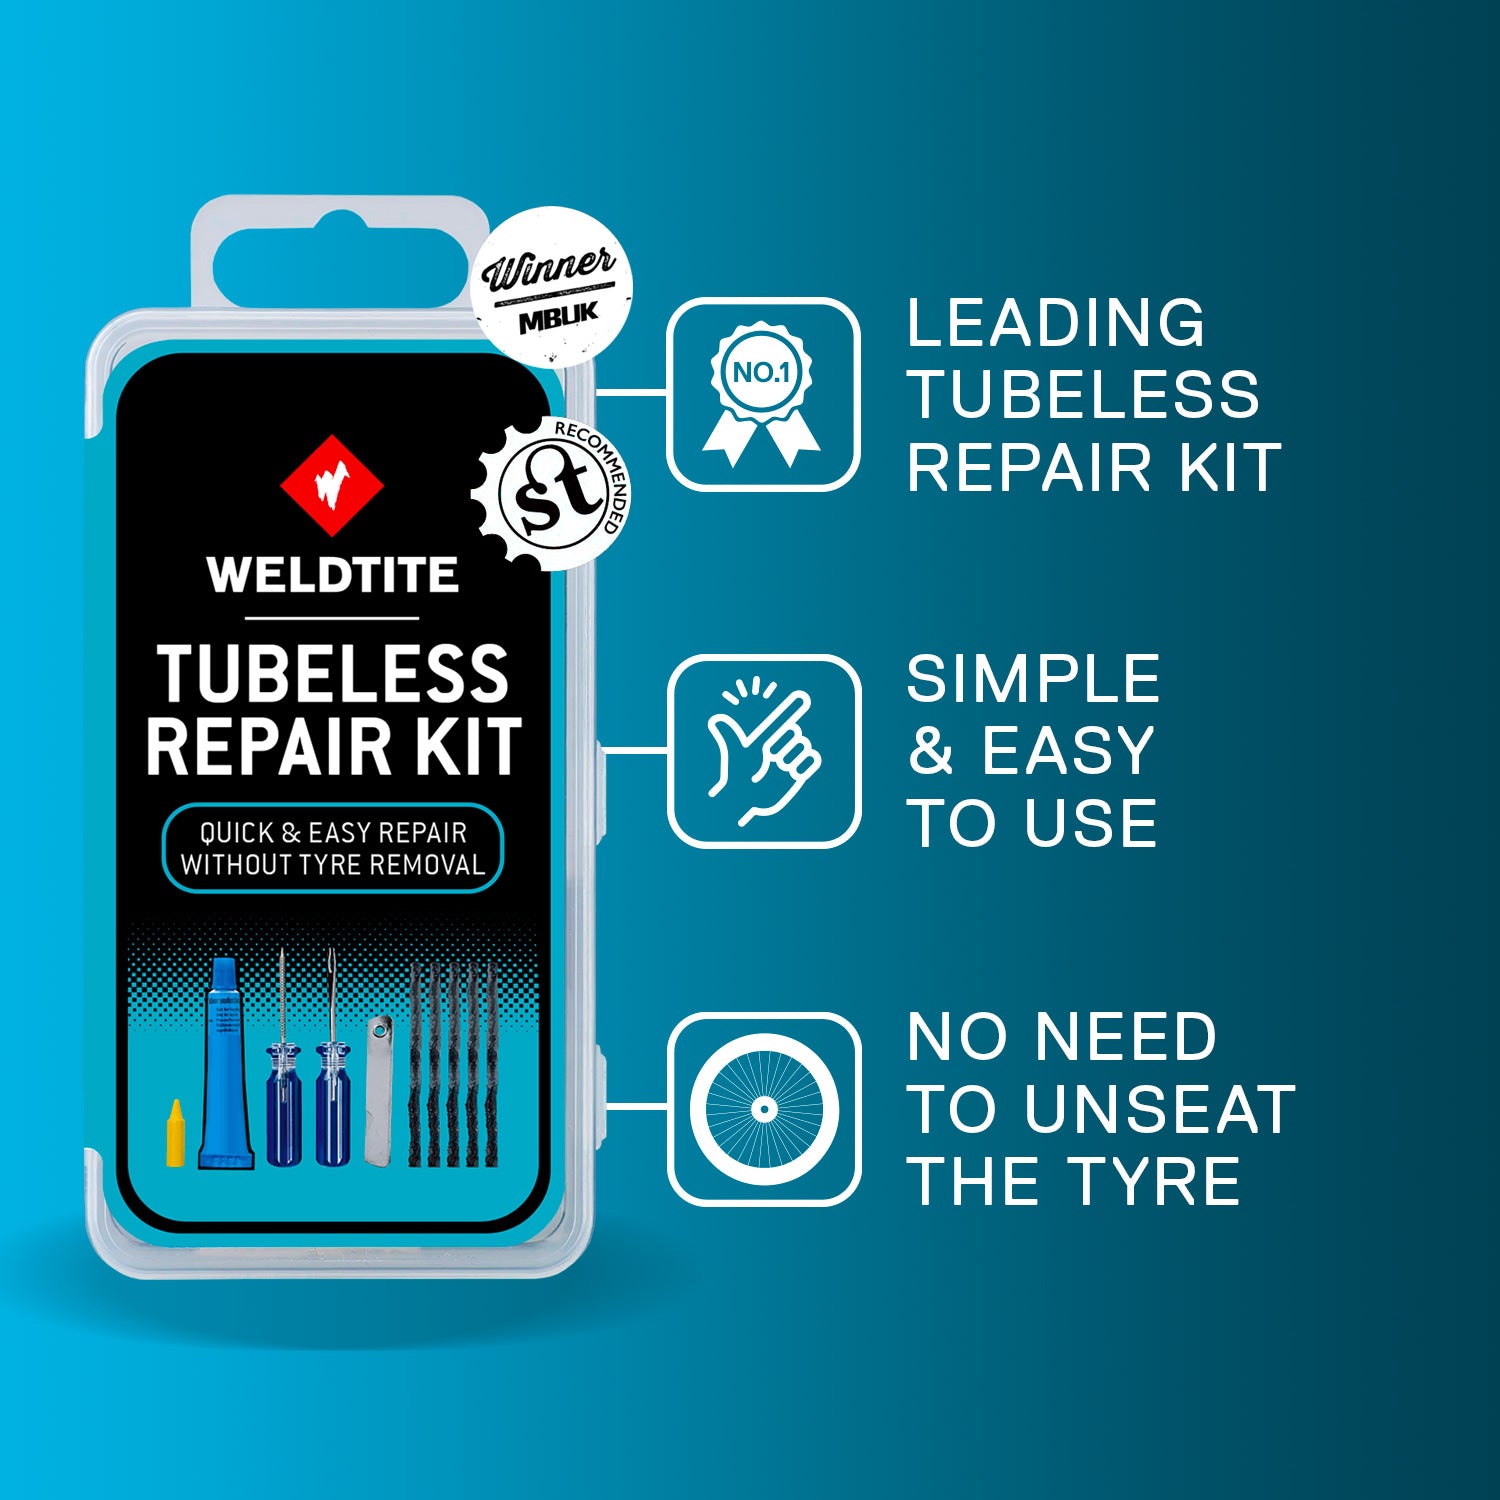 Weldtite Tubeless Repair Kit - Efficient Tire Fix